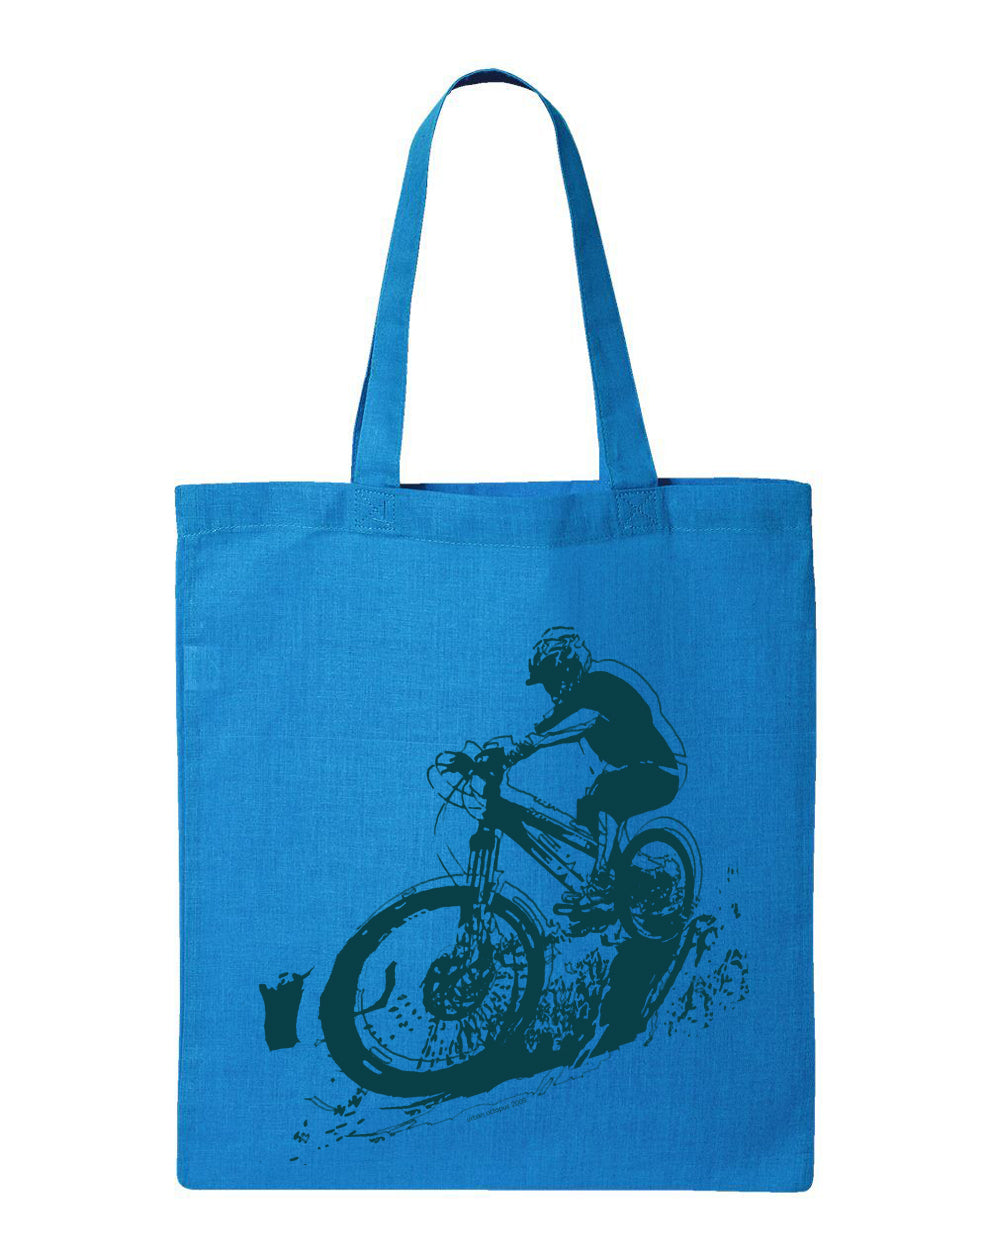 "Mountain Bike" Tote canvas bag